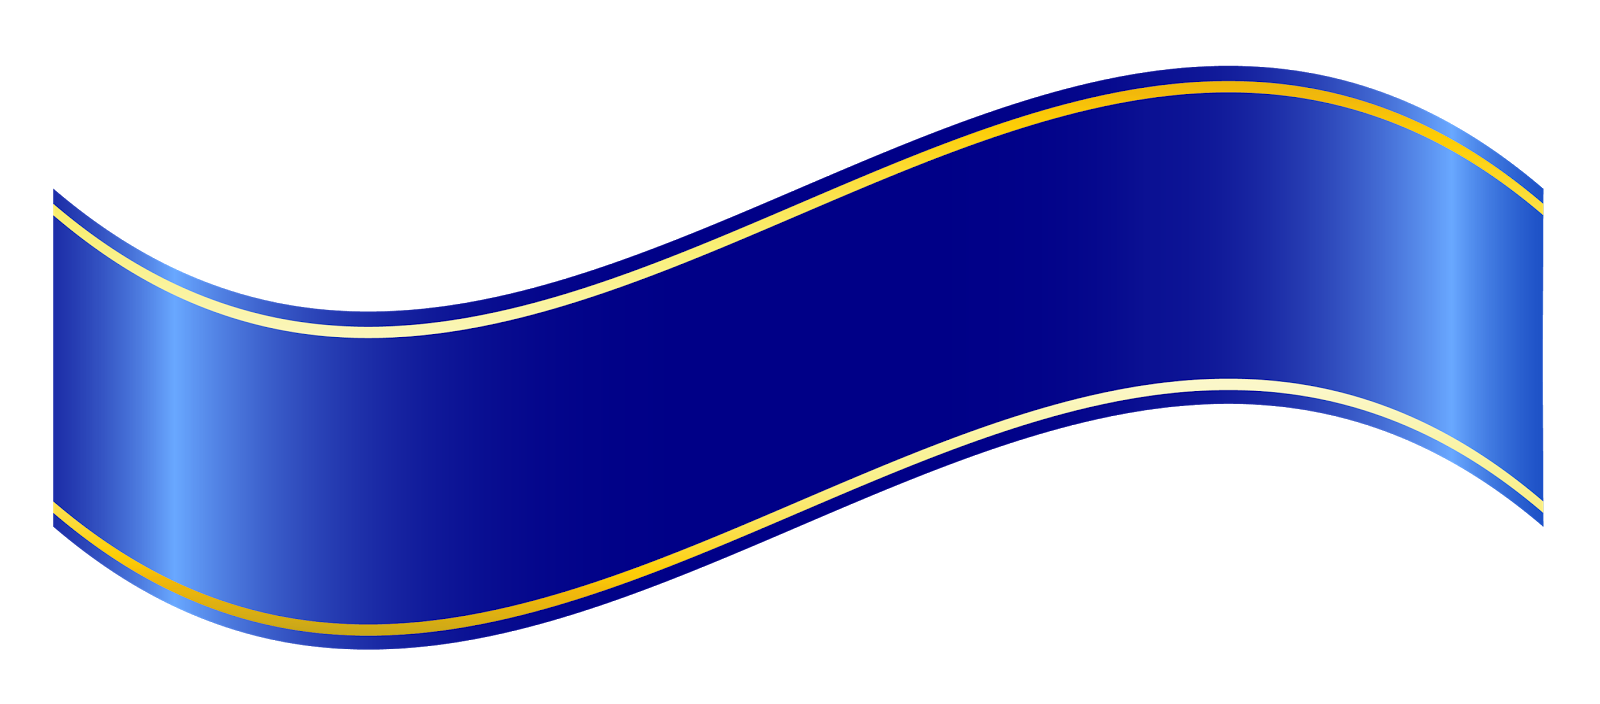 Blue ribbon Banner Clip art - web banner png download - 1600*704 - Free ...